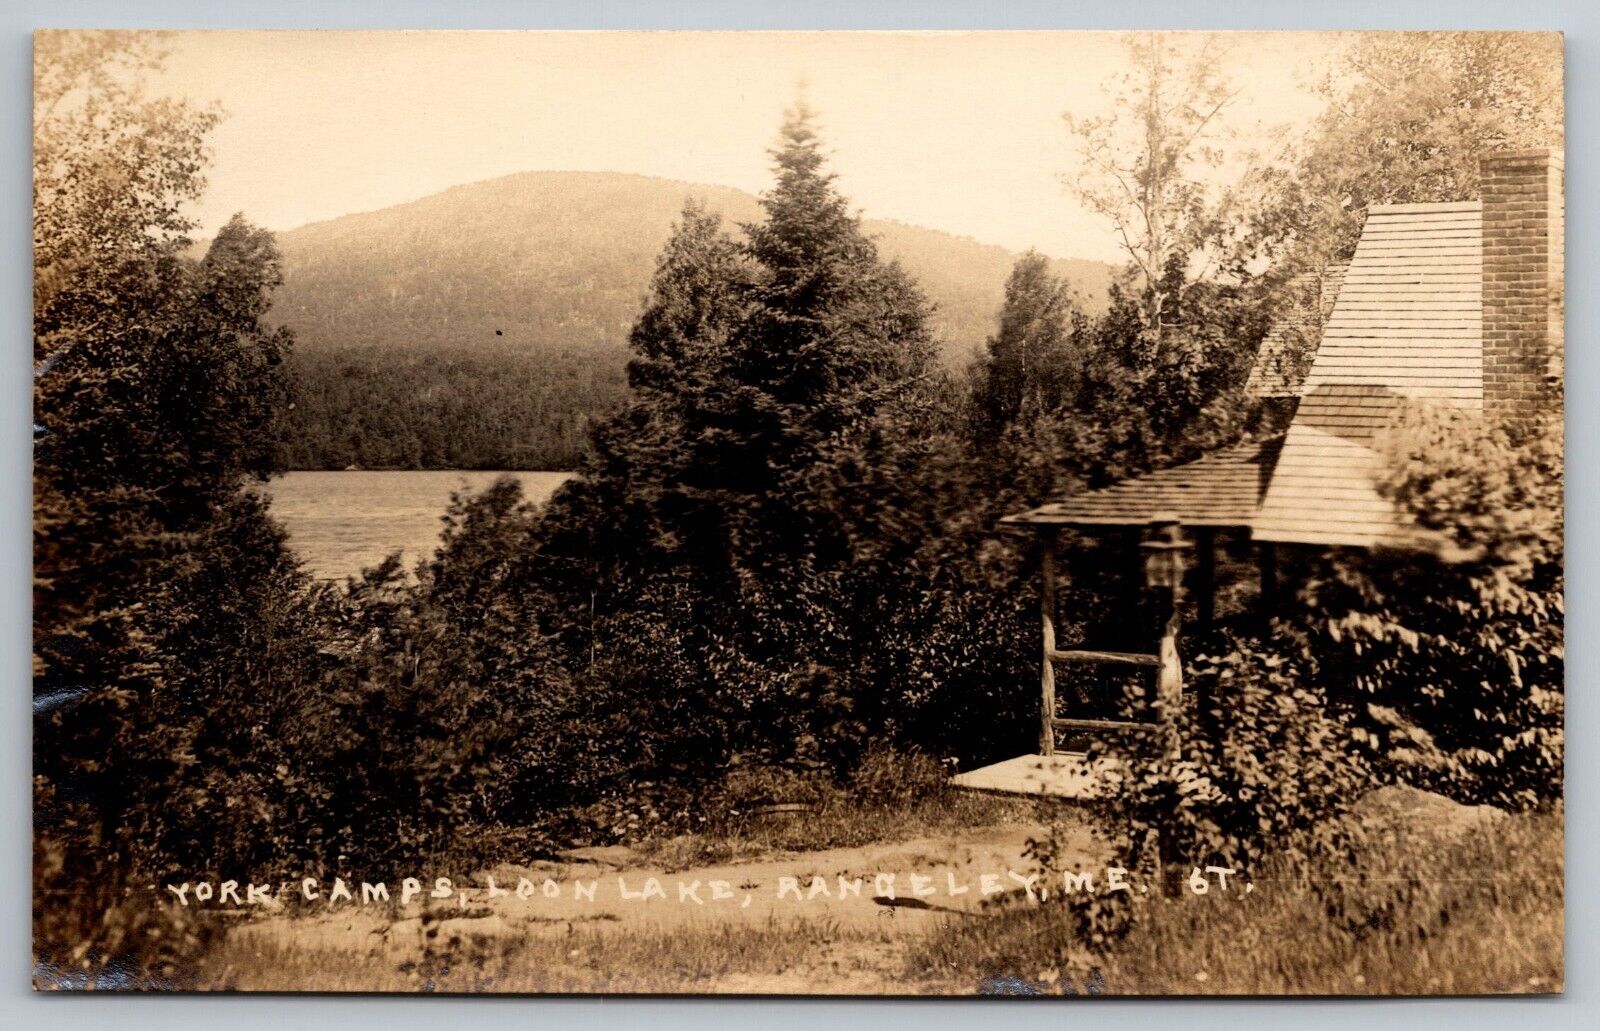 York Camps. Loon Lake. Rangeley Maine Real Photo Postcard. RPPC